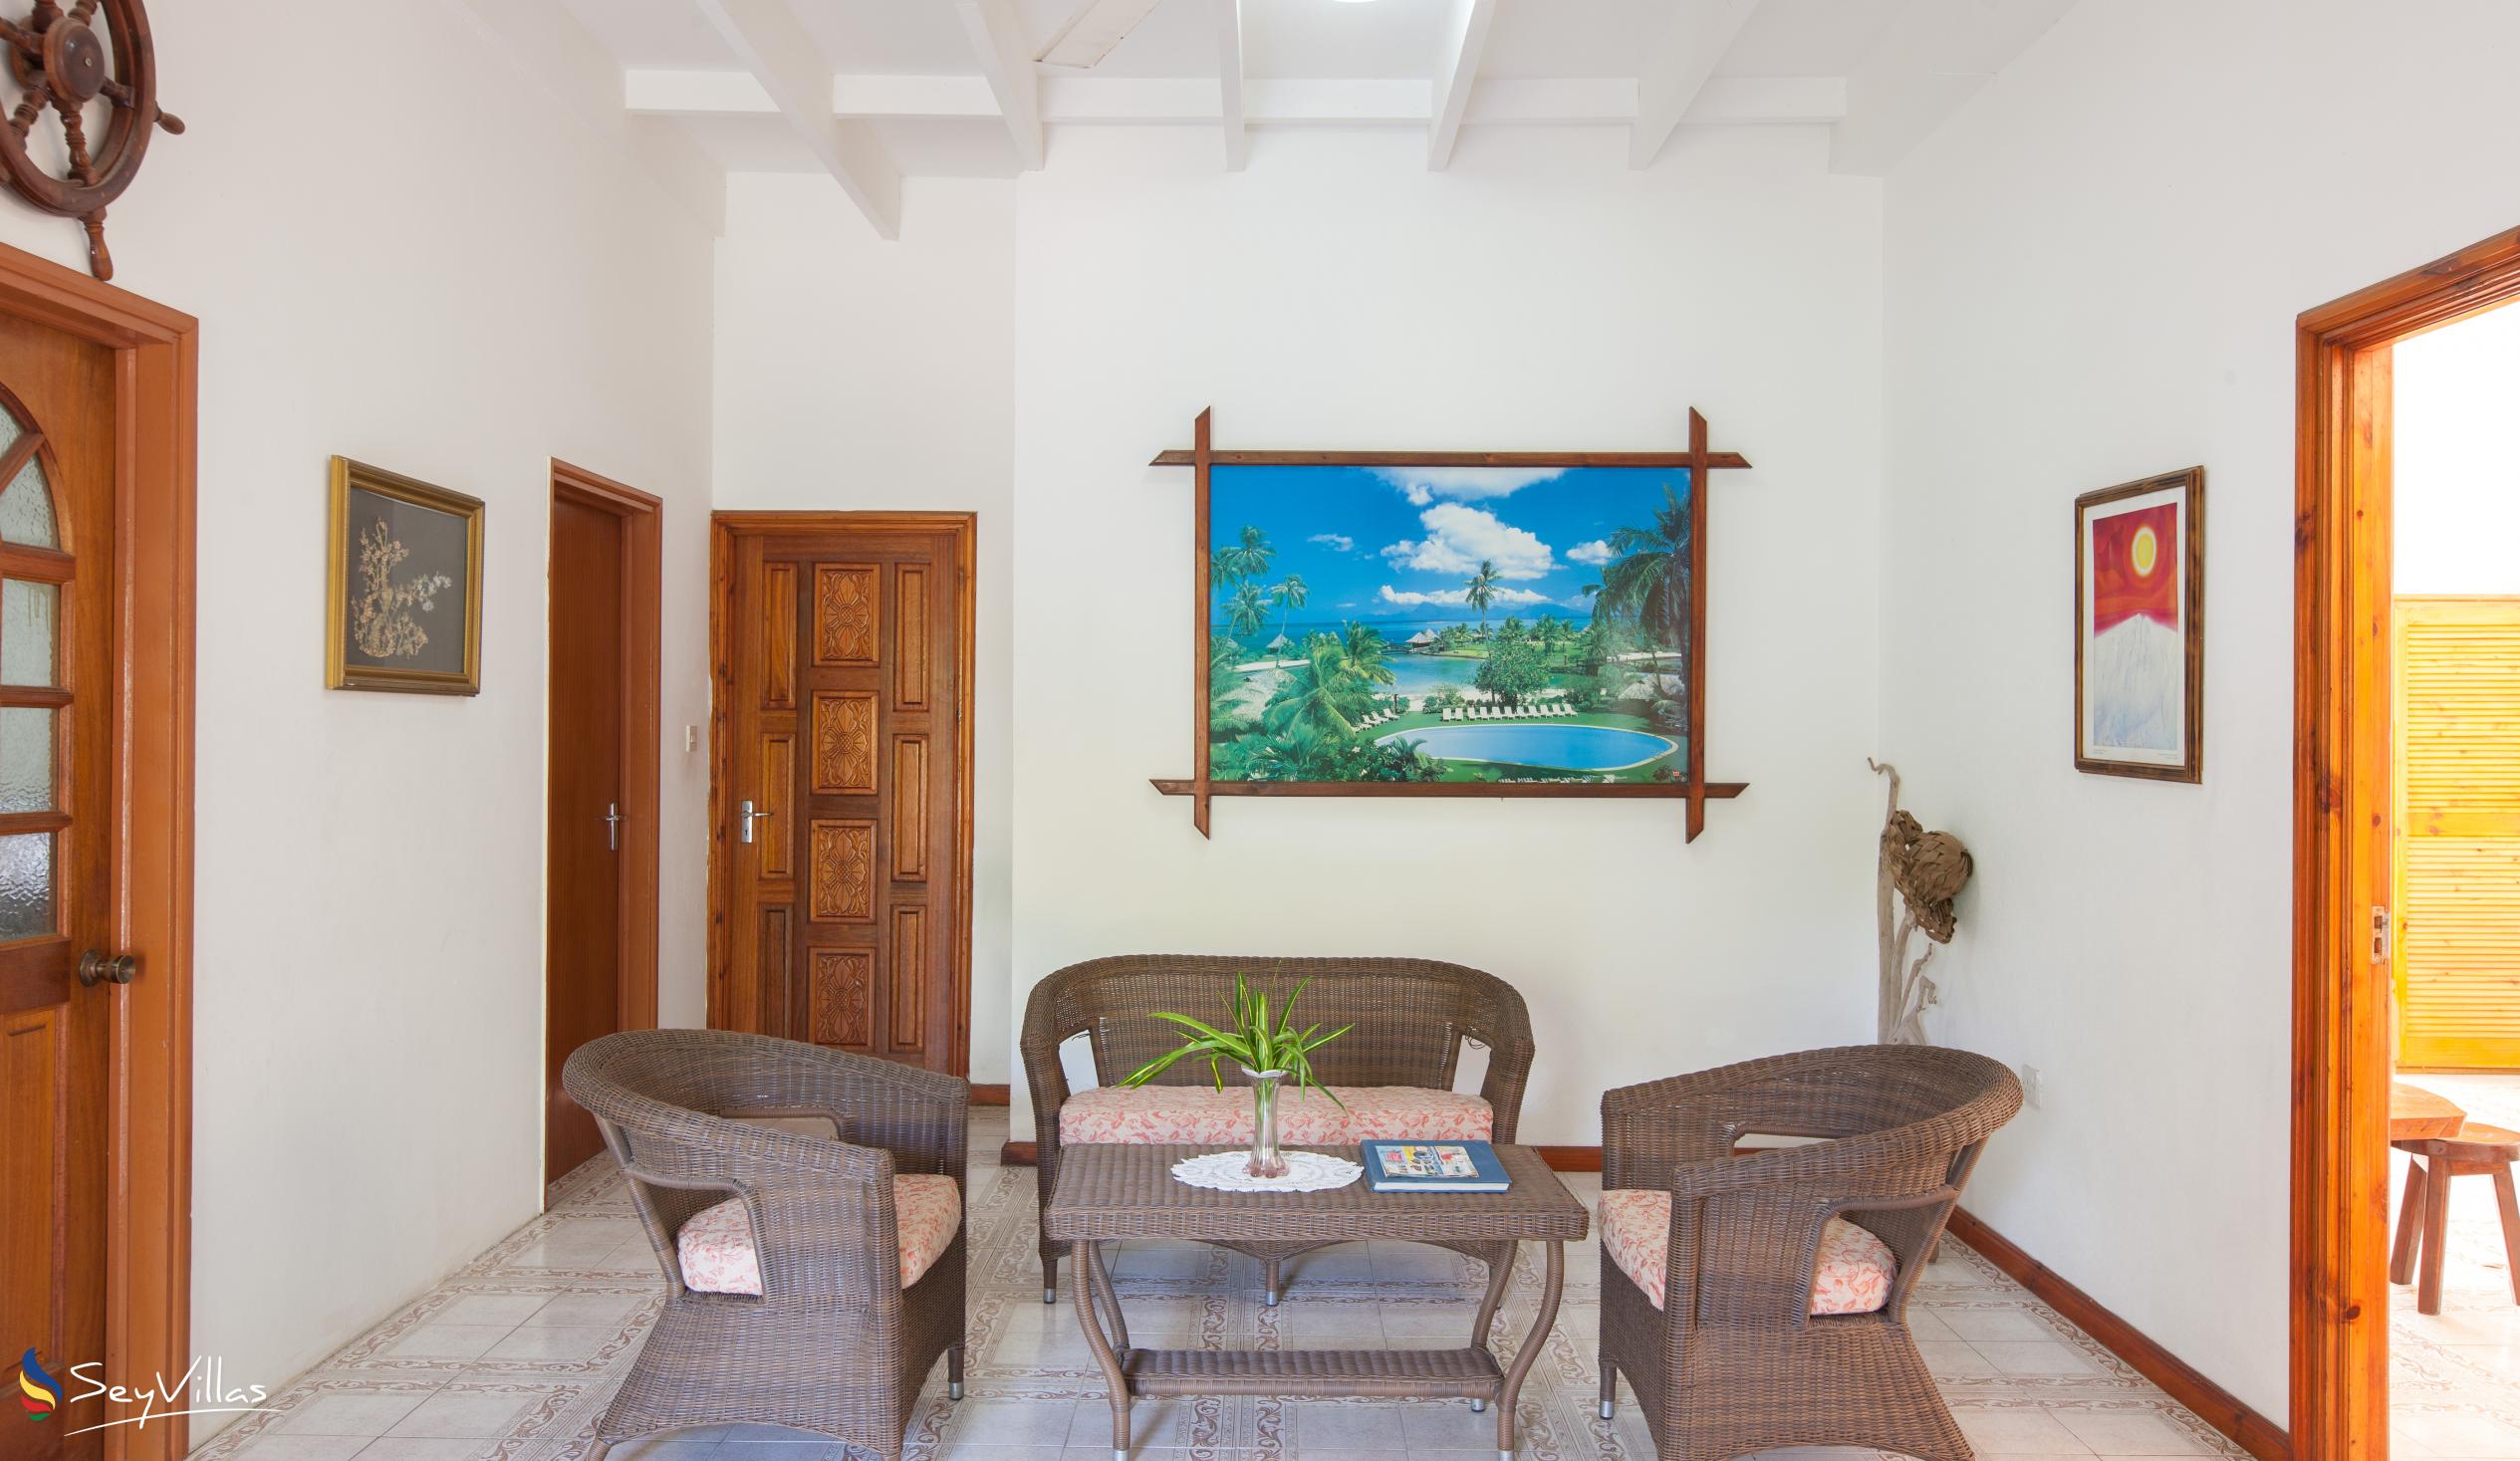 Foto 15: Zerof Guesthouse - Innenbereich - La Digue (Seychellen)